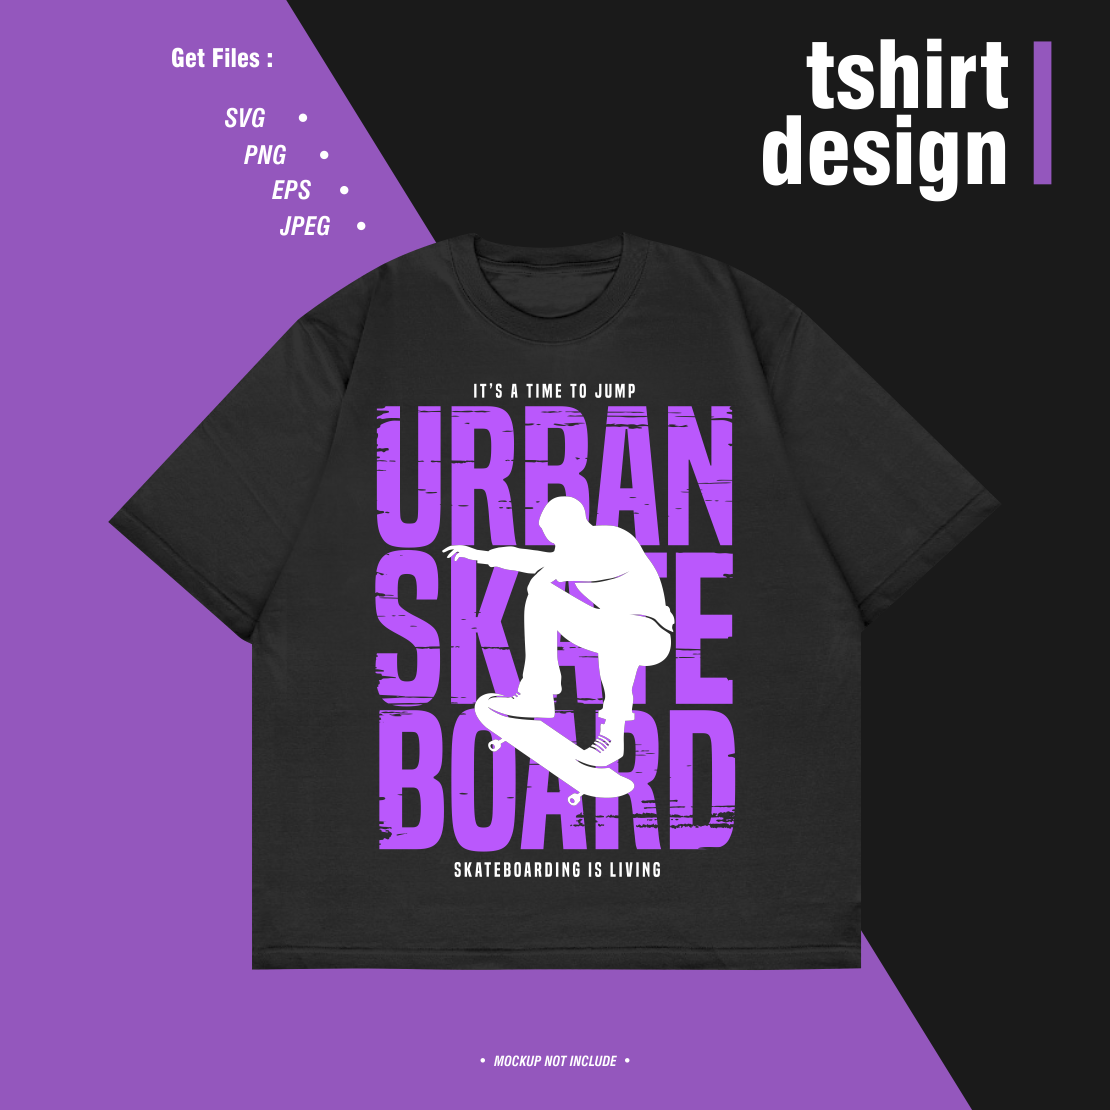 Uniqlo Brings Skateboarding Streetwear Vibe to T-Shirt Sub-Brand - Bloomberg